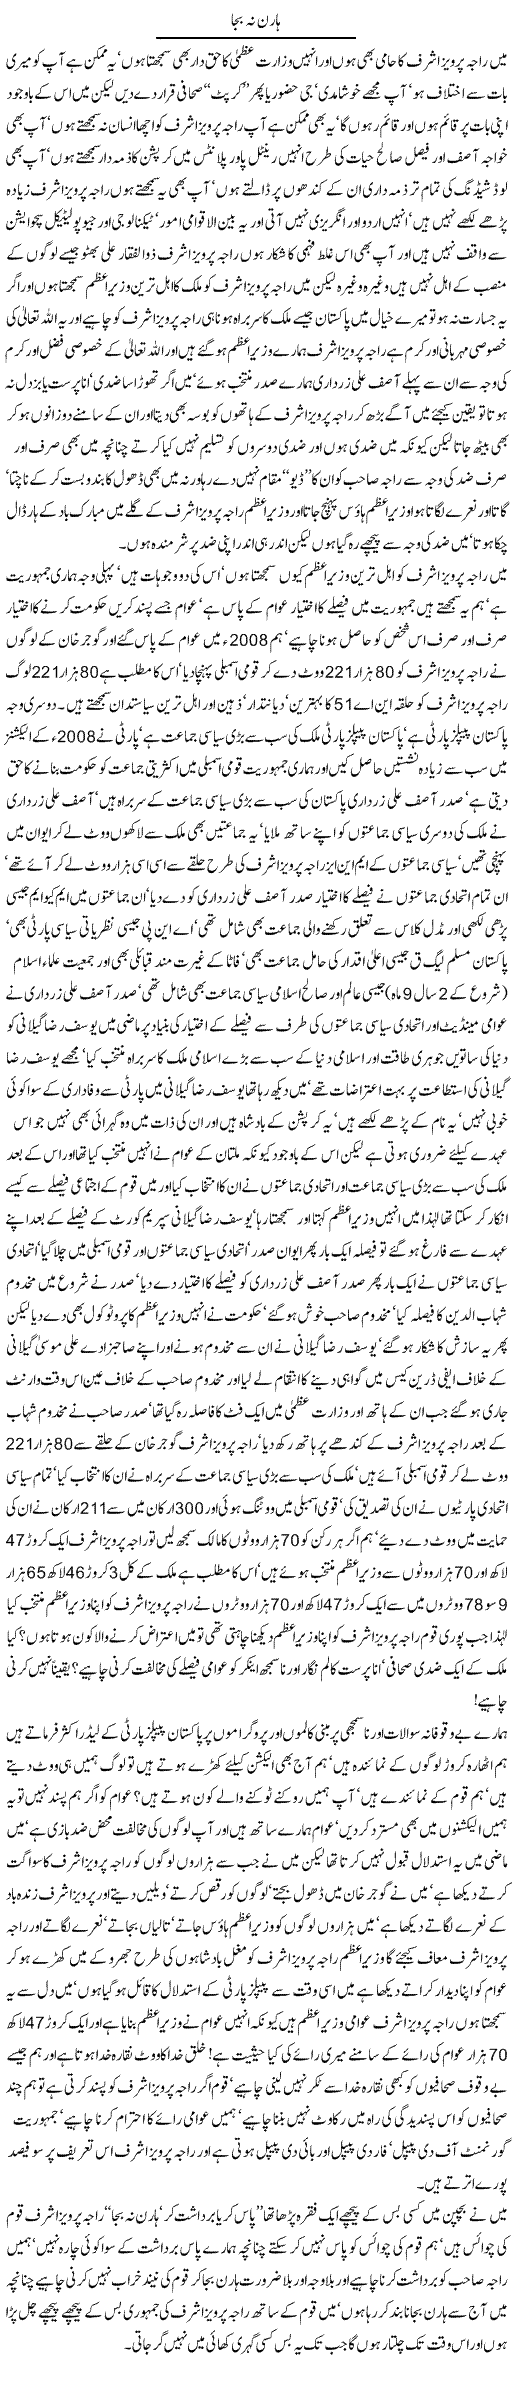 Raja Pervez Ashraf Express Column Javed Chaudhry 26 June 2012